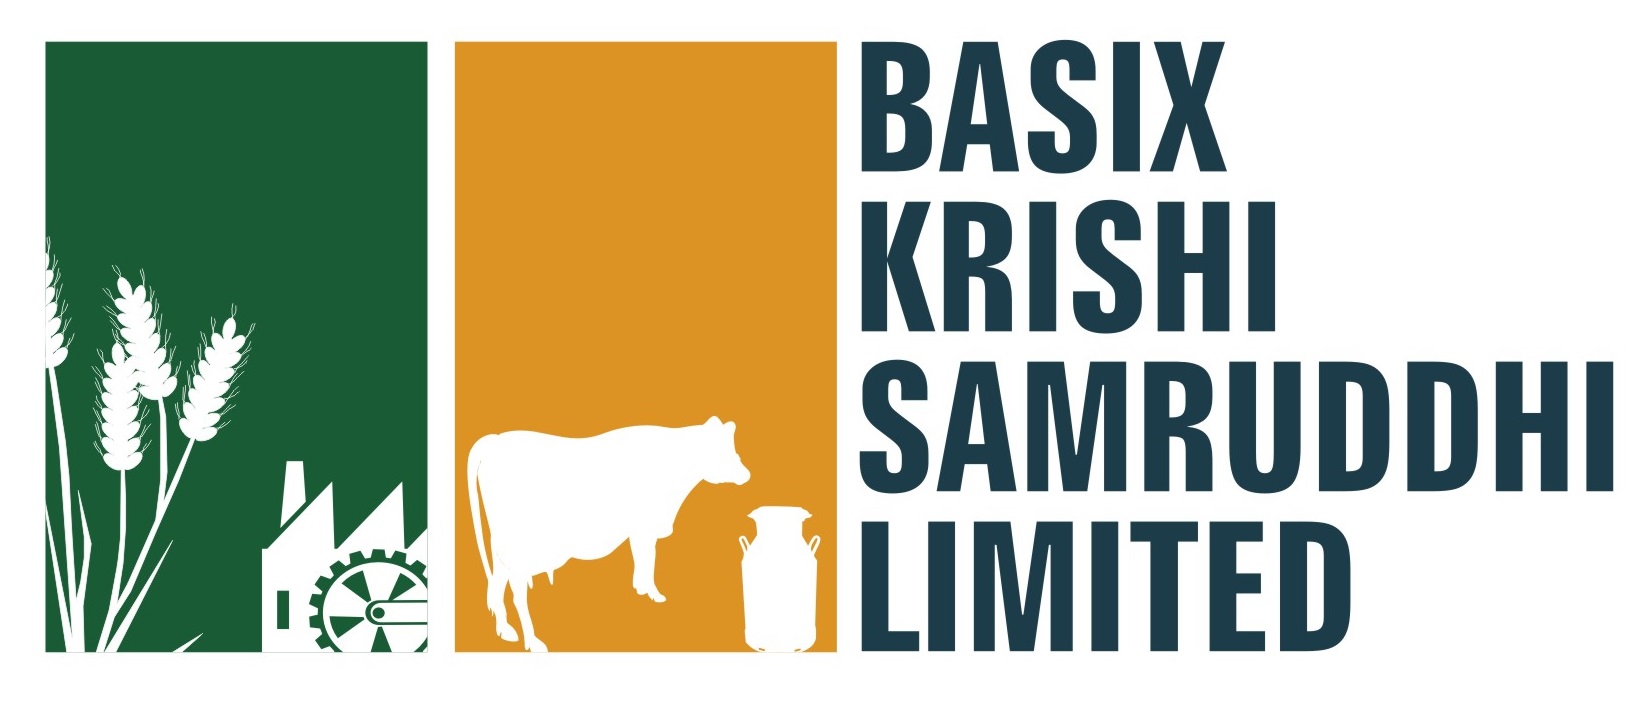 Basix Krishi Samruddhi Limited